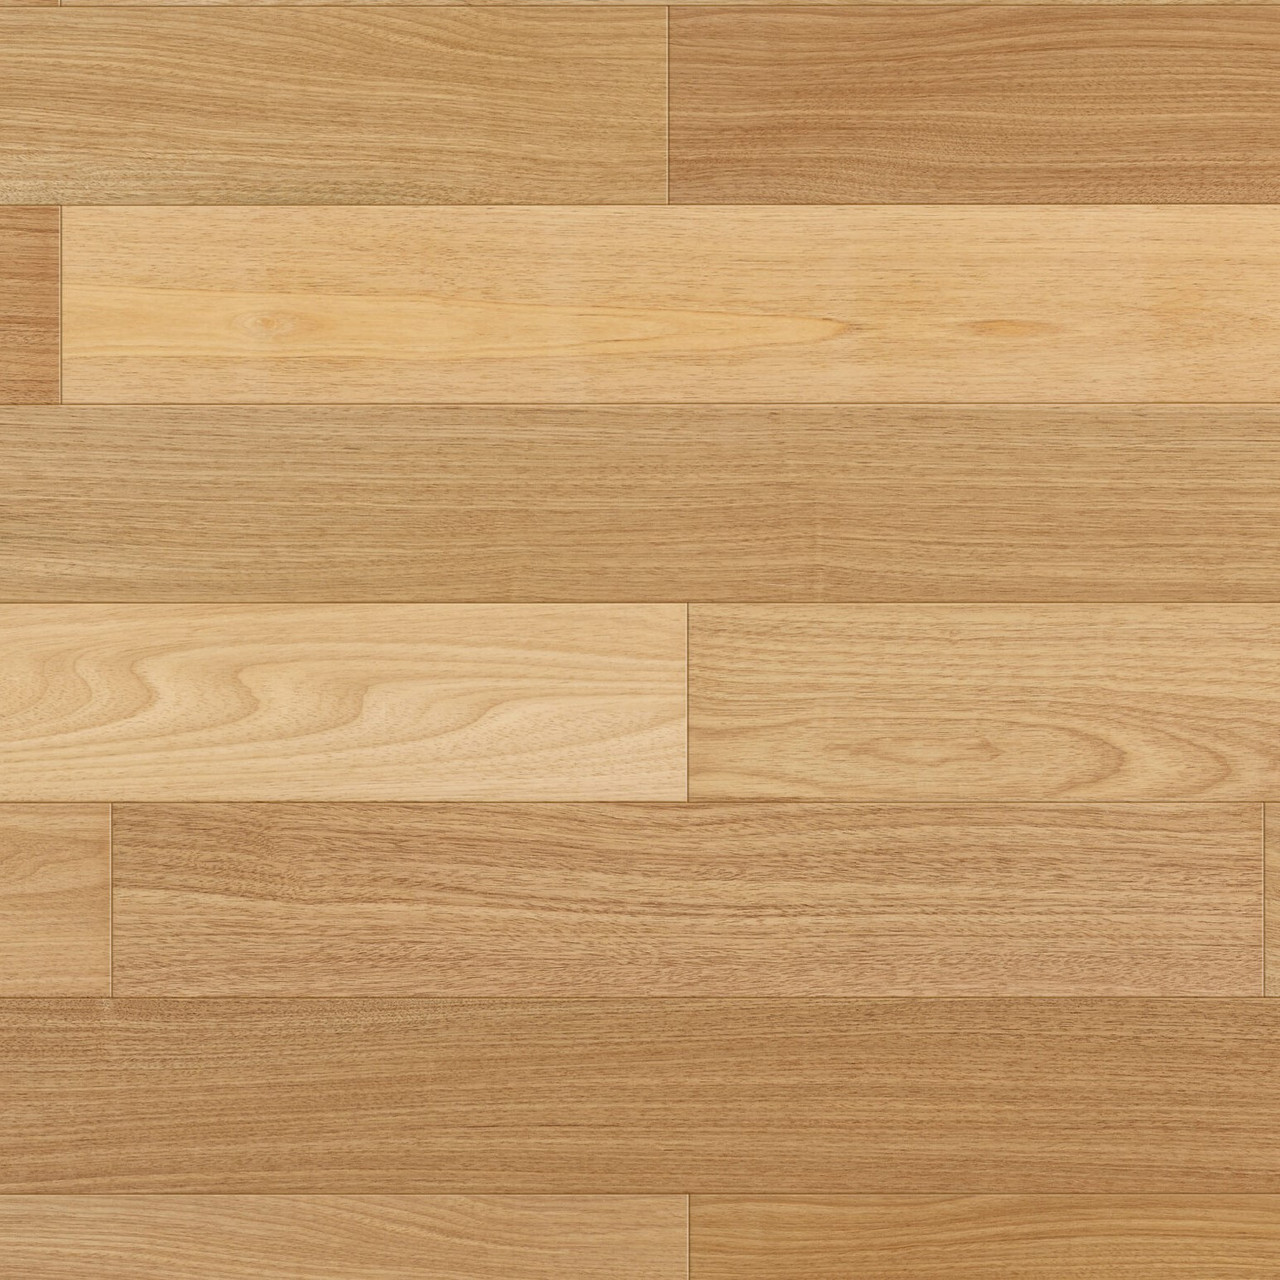 Bamboo Wood Flooring Vs. Oak Wood Flooring - Wood and Beyond Blog